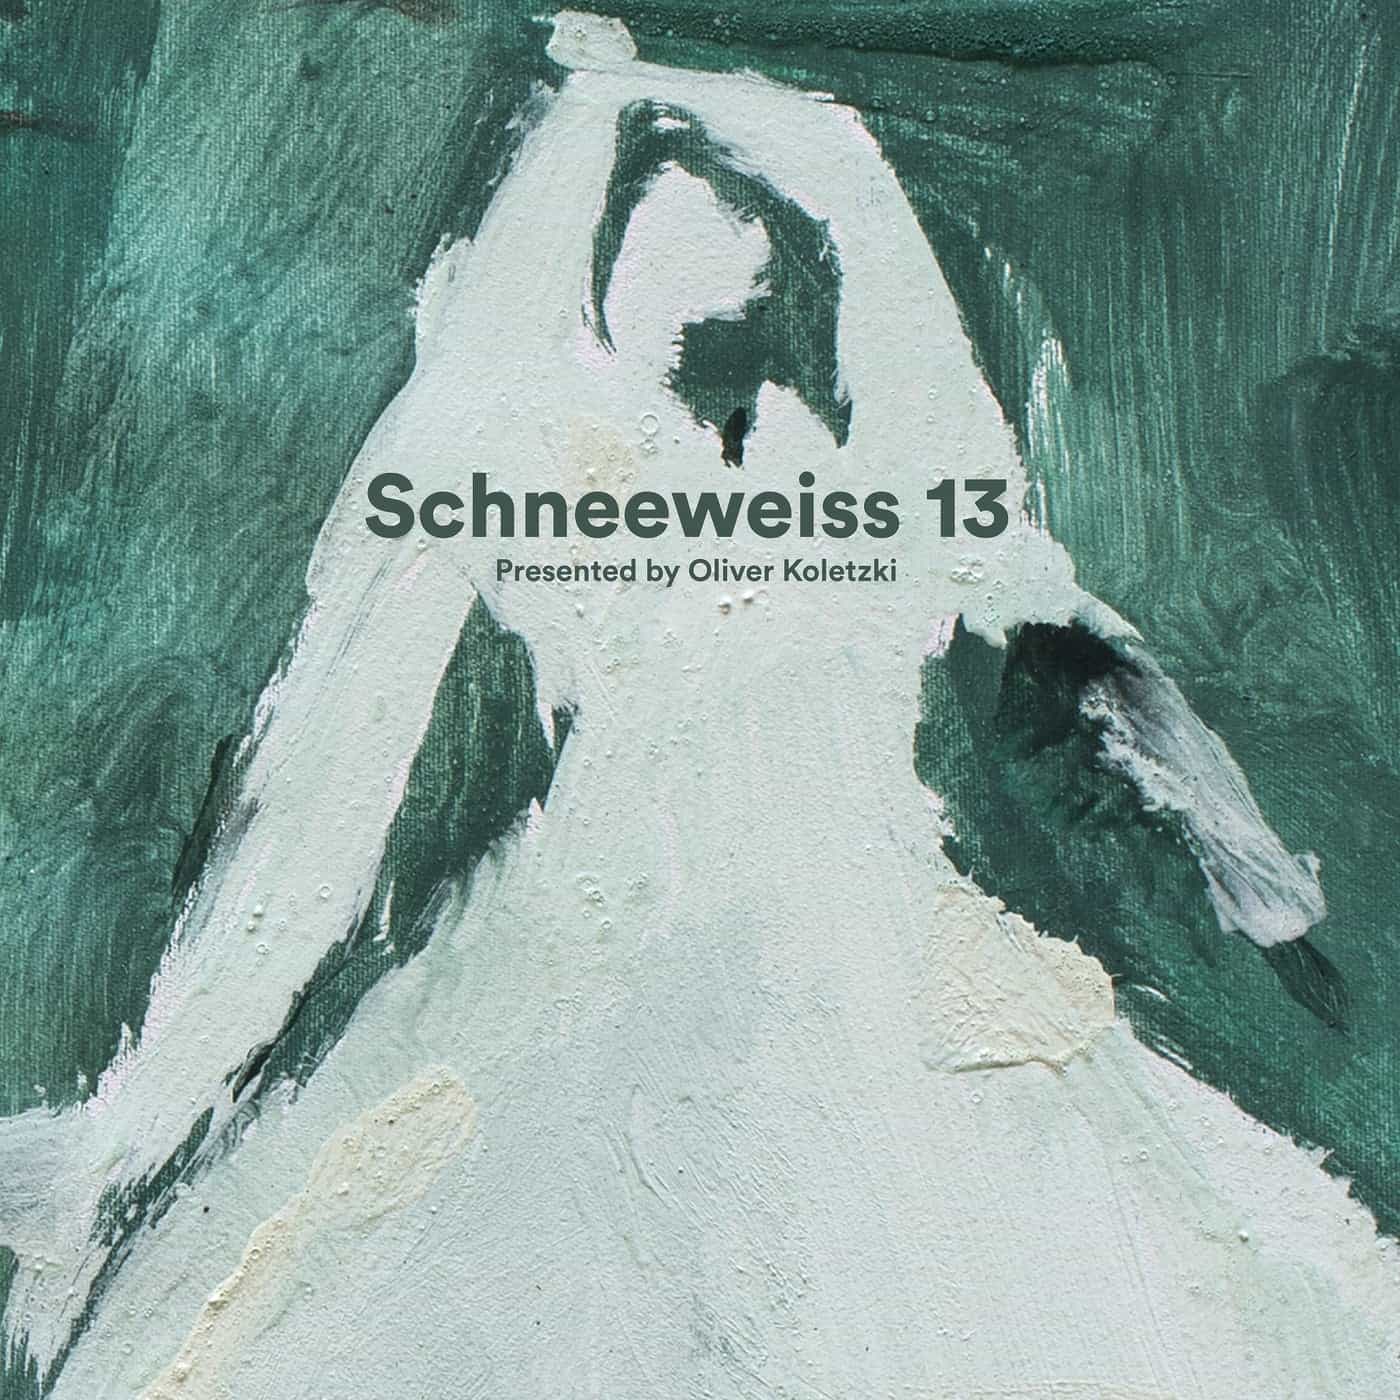 Download Schneeweiss 13: Presented by Oliver Koletzki on Electrobuzz